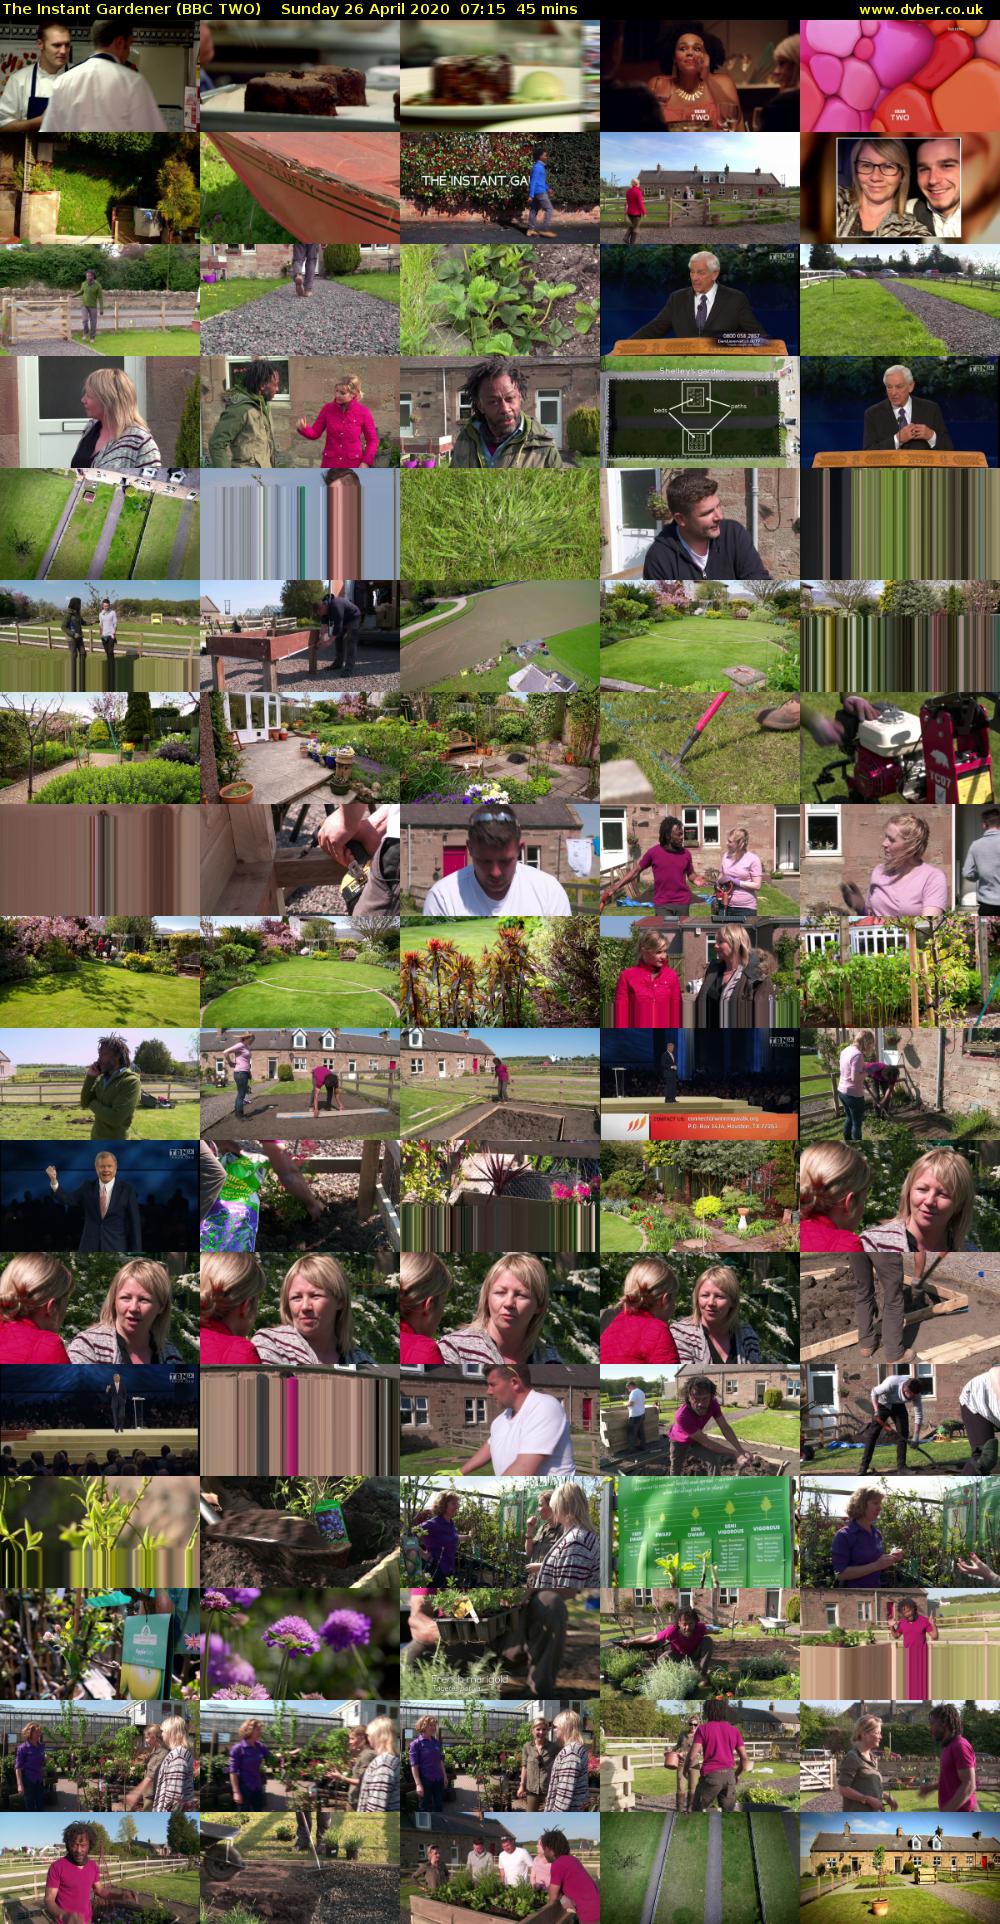 The Instant Gardener (BBC TWO) Sunday 26 April 2020 07:15 - 08:00